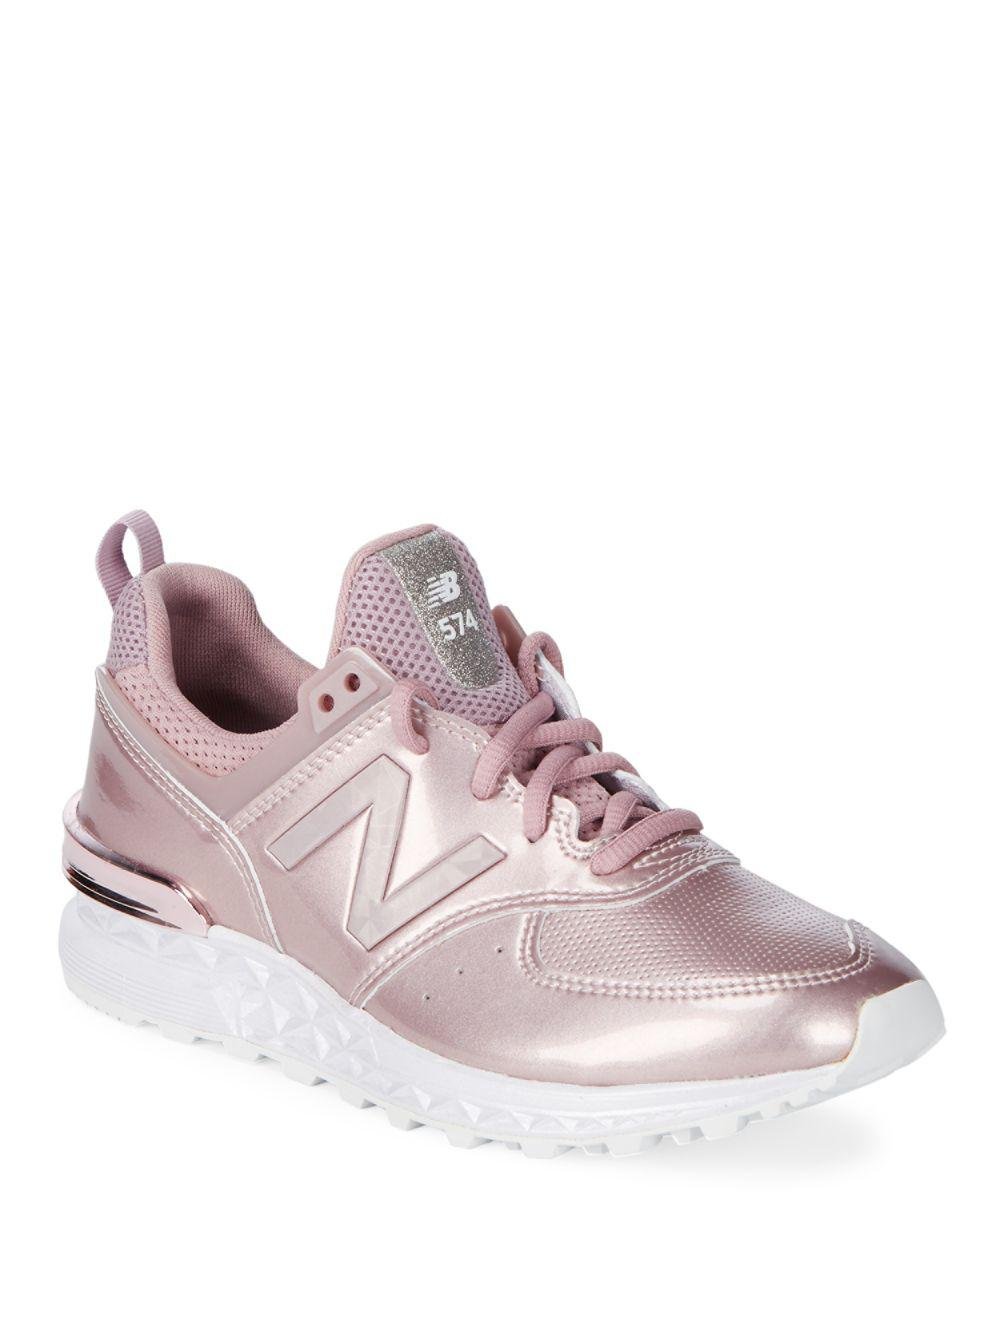 New Balance Metallic 574 Sneakers in Pink - Lyst